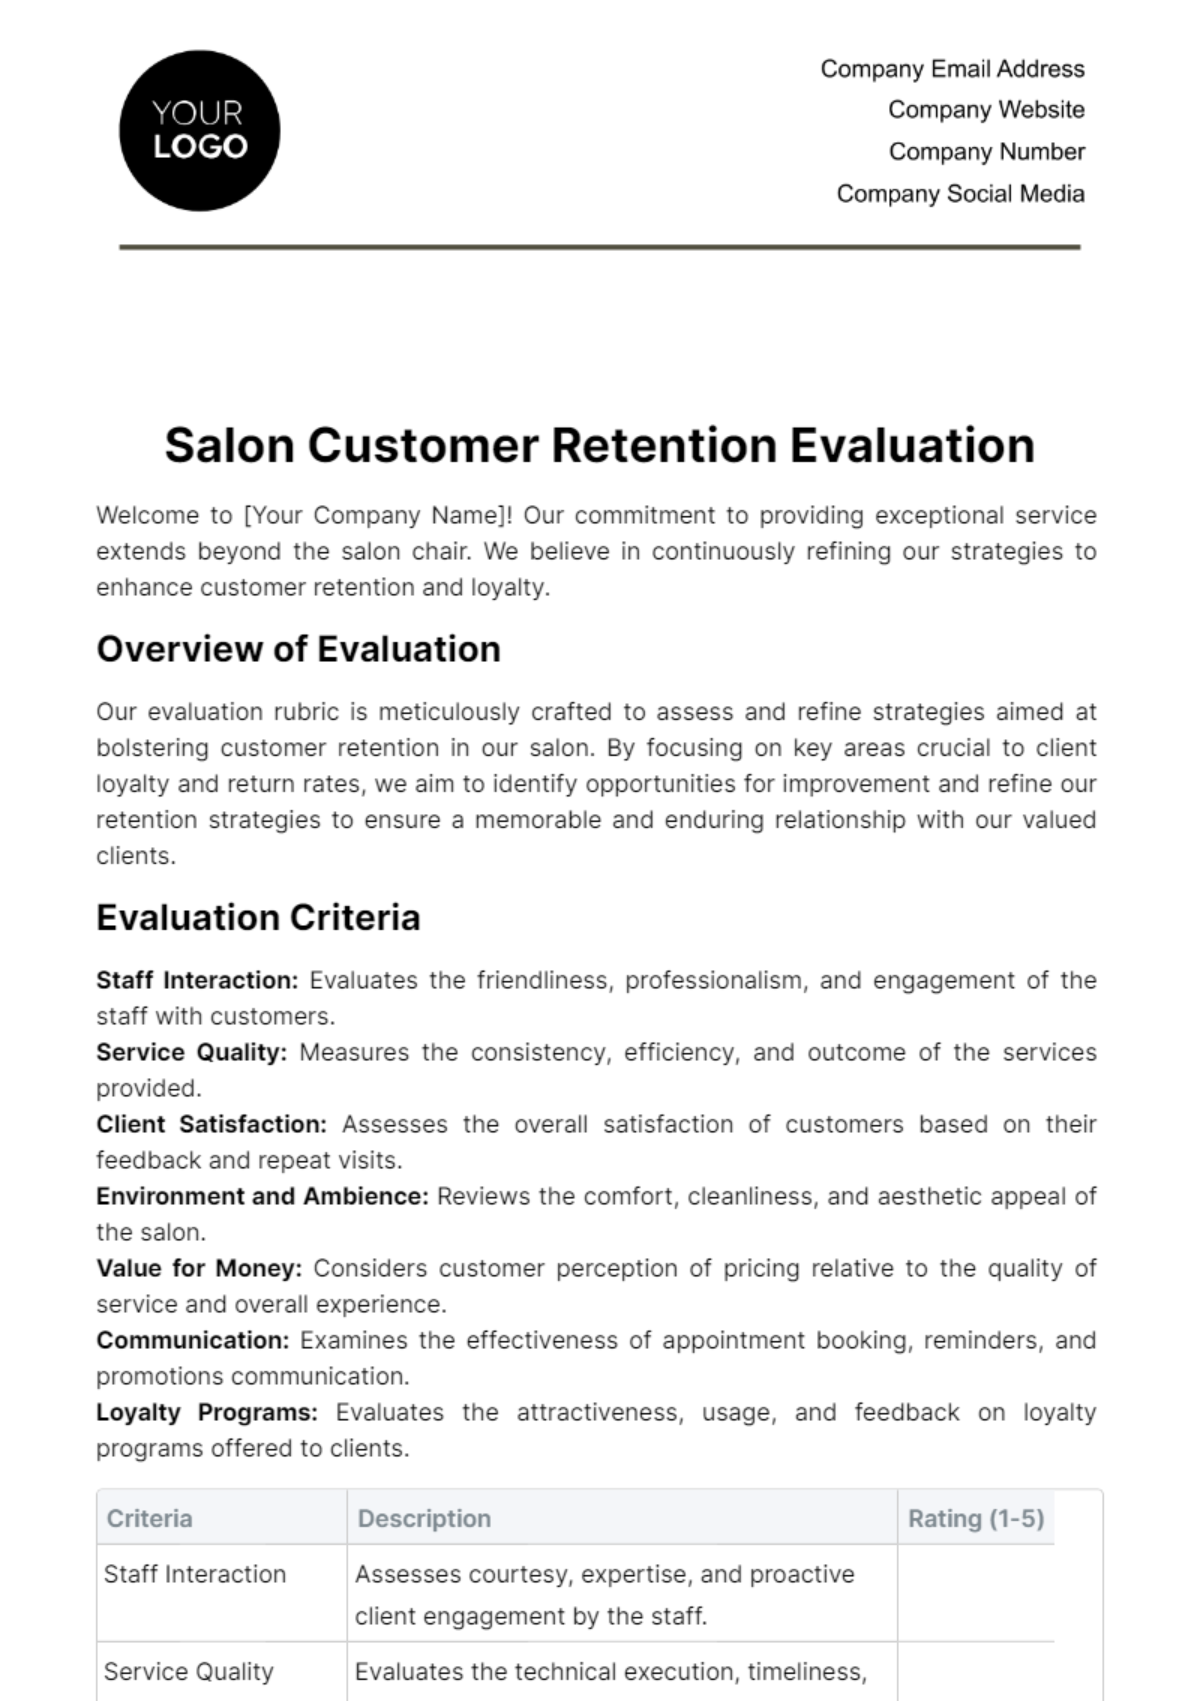 Free Salon Customer Retention Evaluation Template